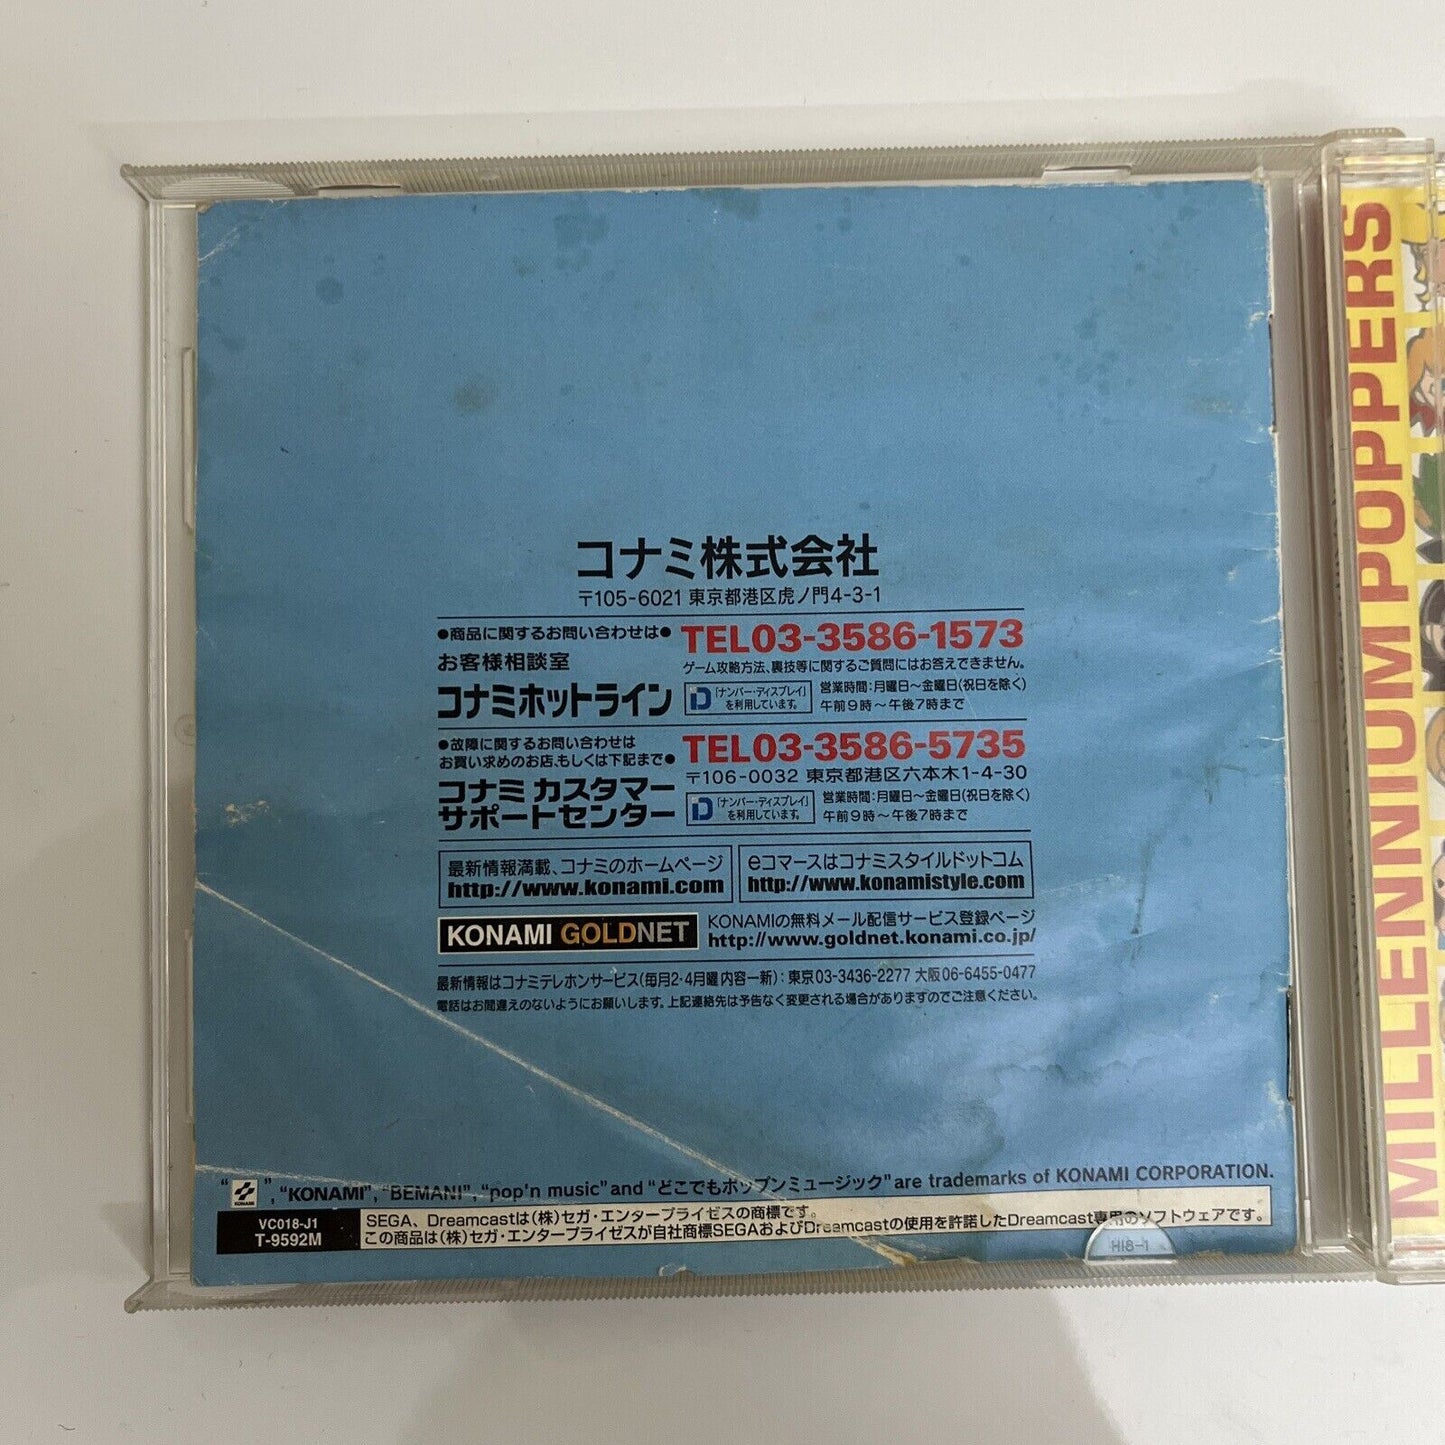 Pop'n Music 4 Append Disc - Sega Dreamcast DC NTSC-J JAPAN Music Konami Game